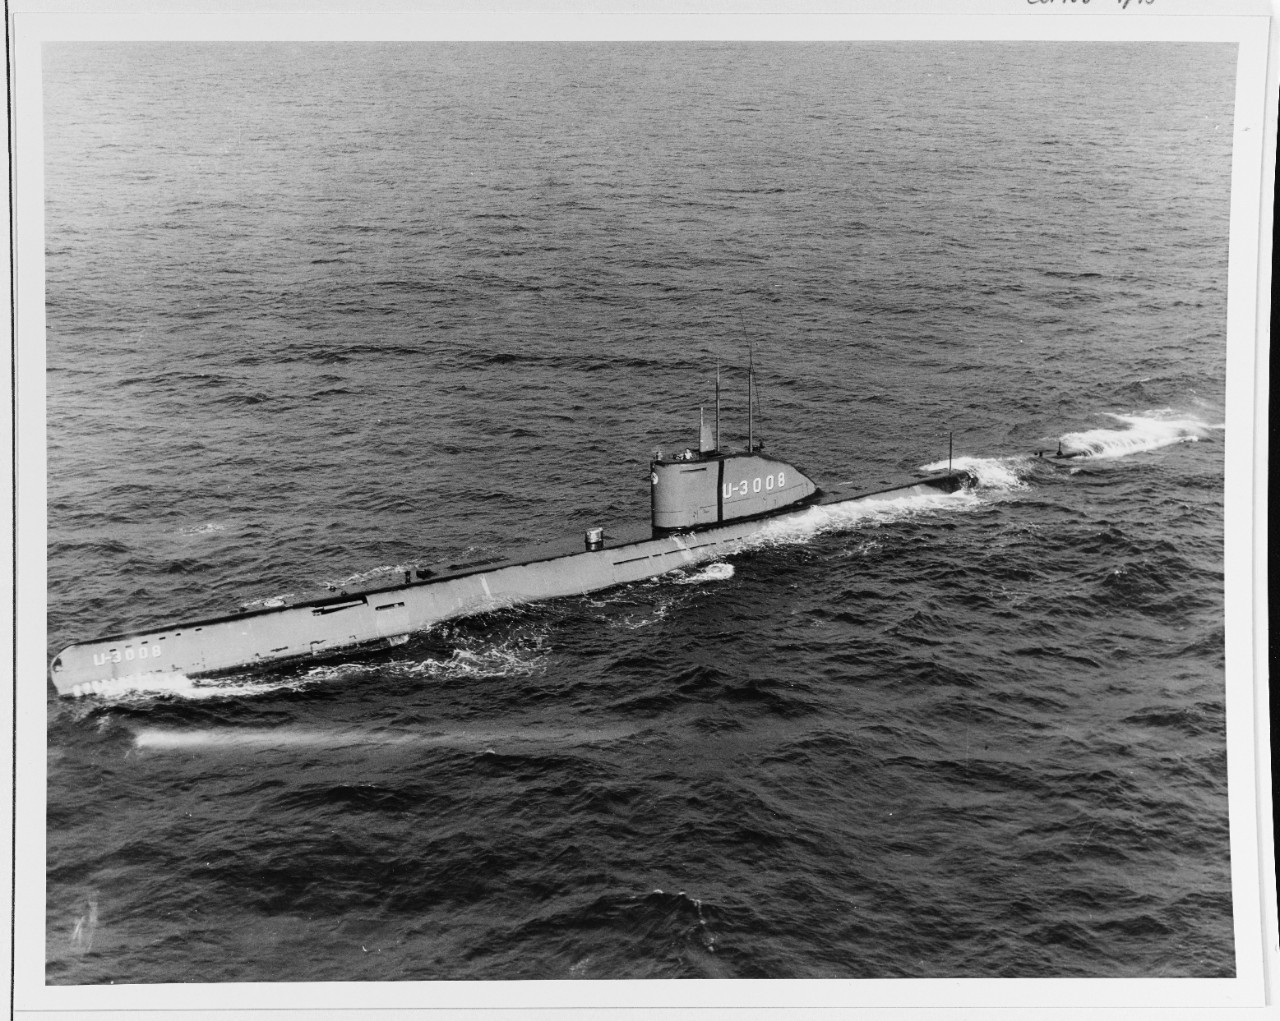 Photo #: 80-G-442933  USS U-3008